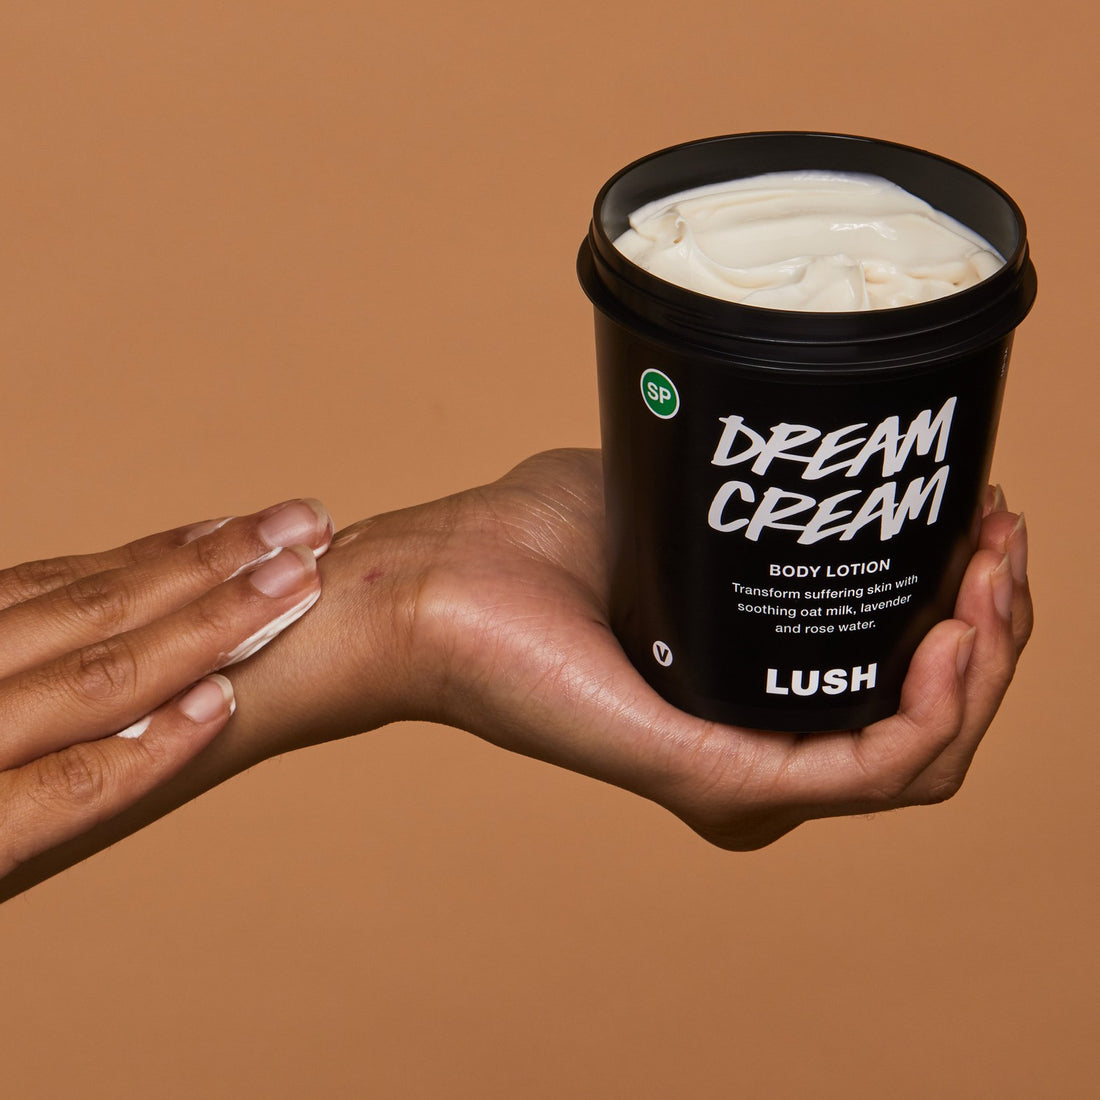 Dream Cream Self-Preserving